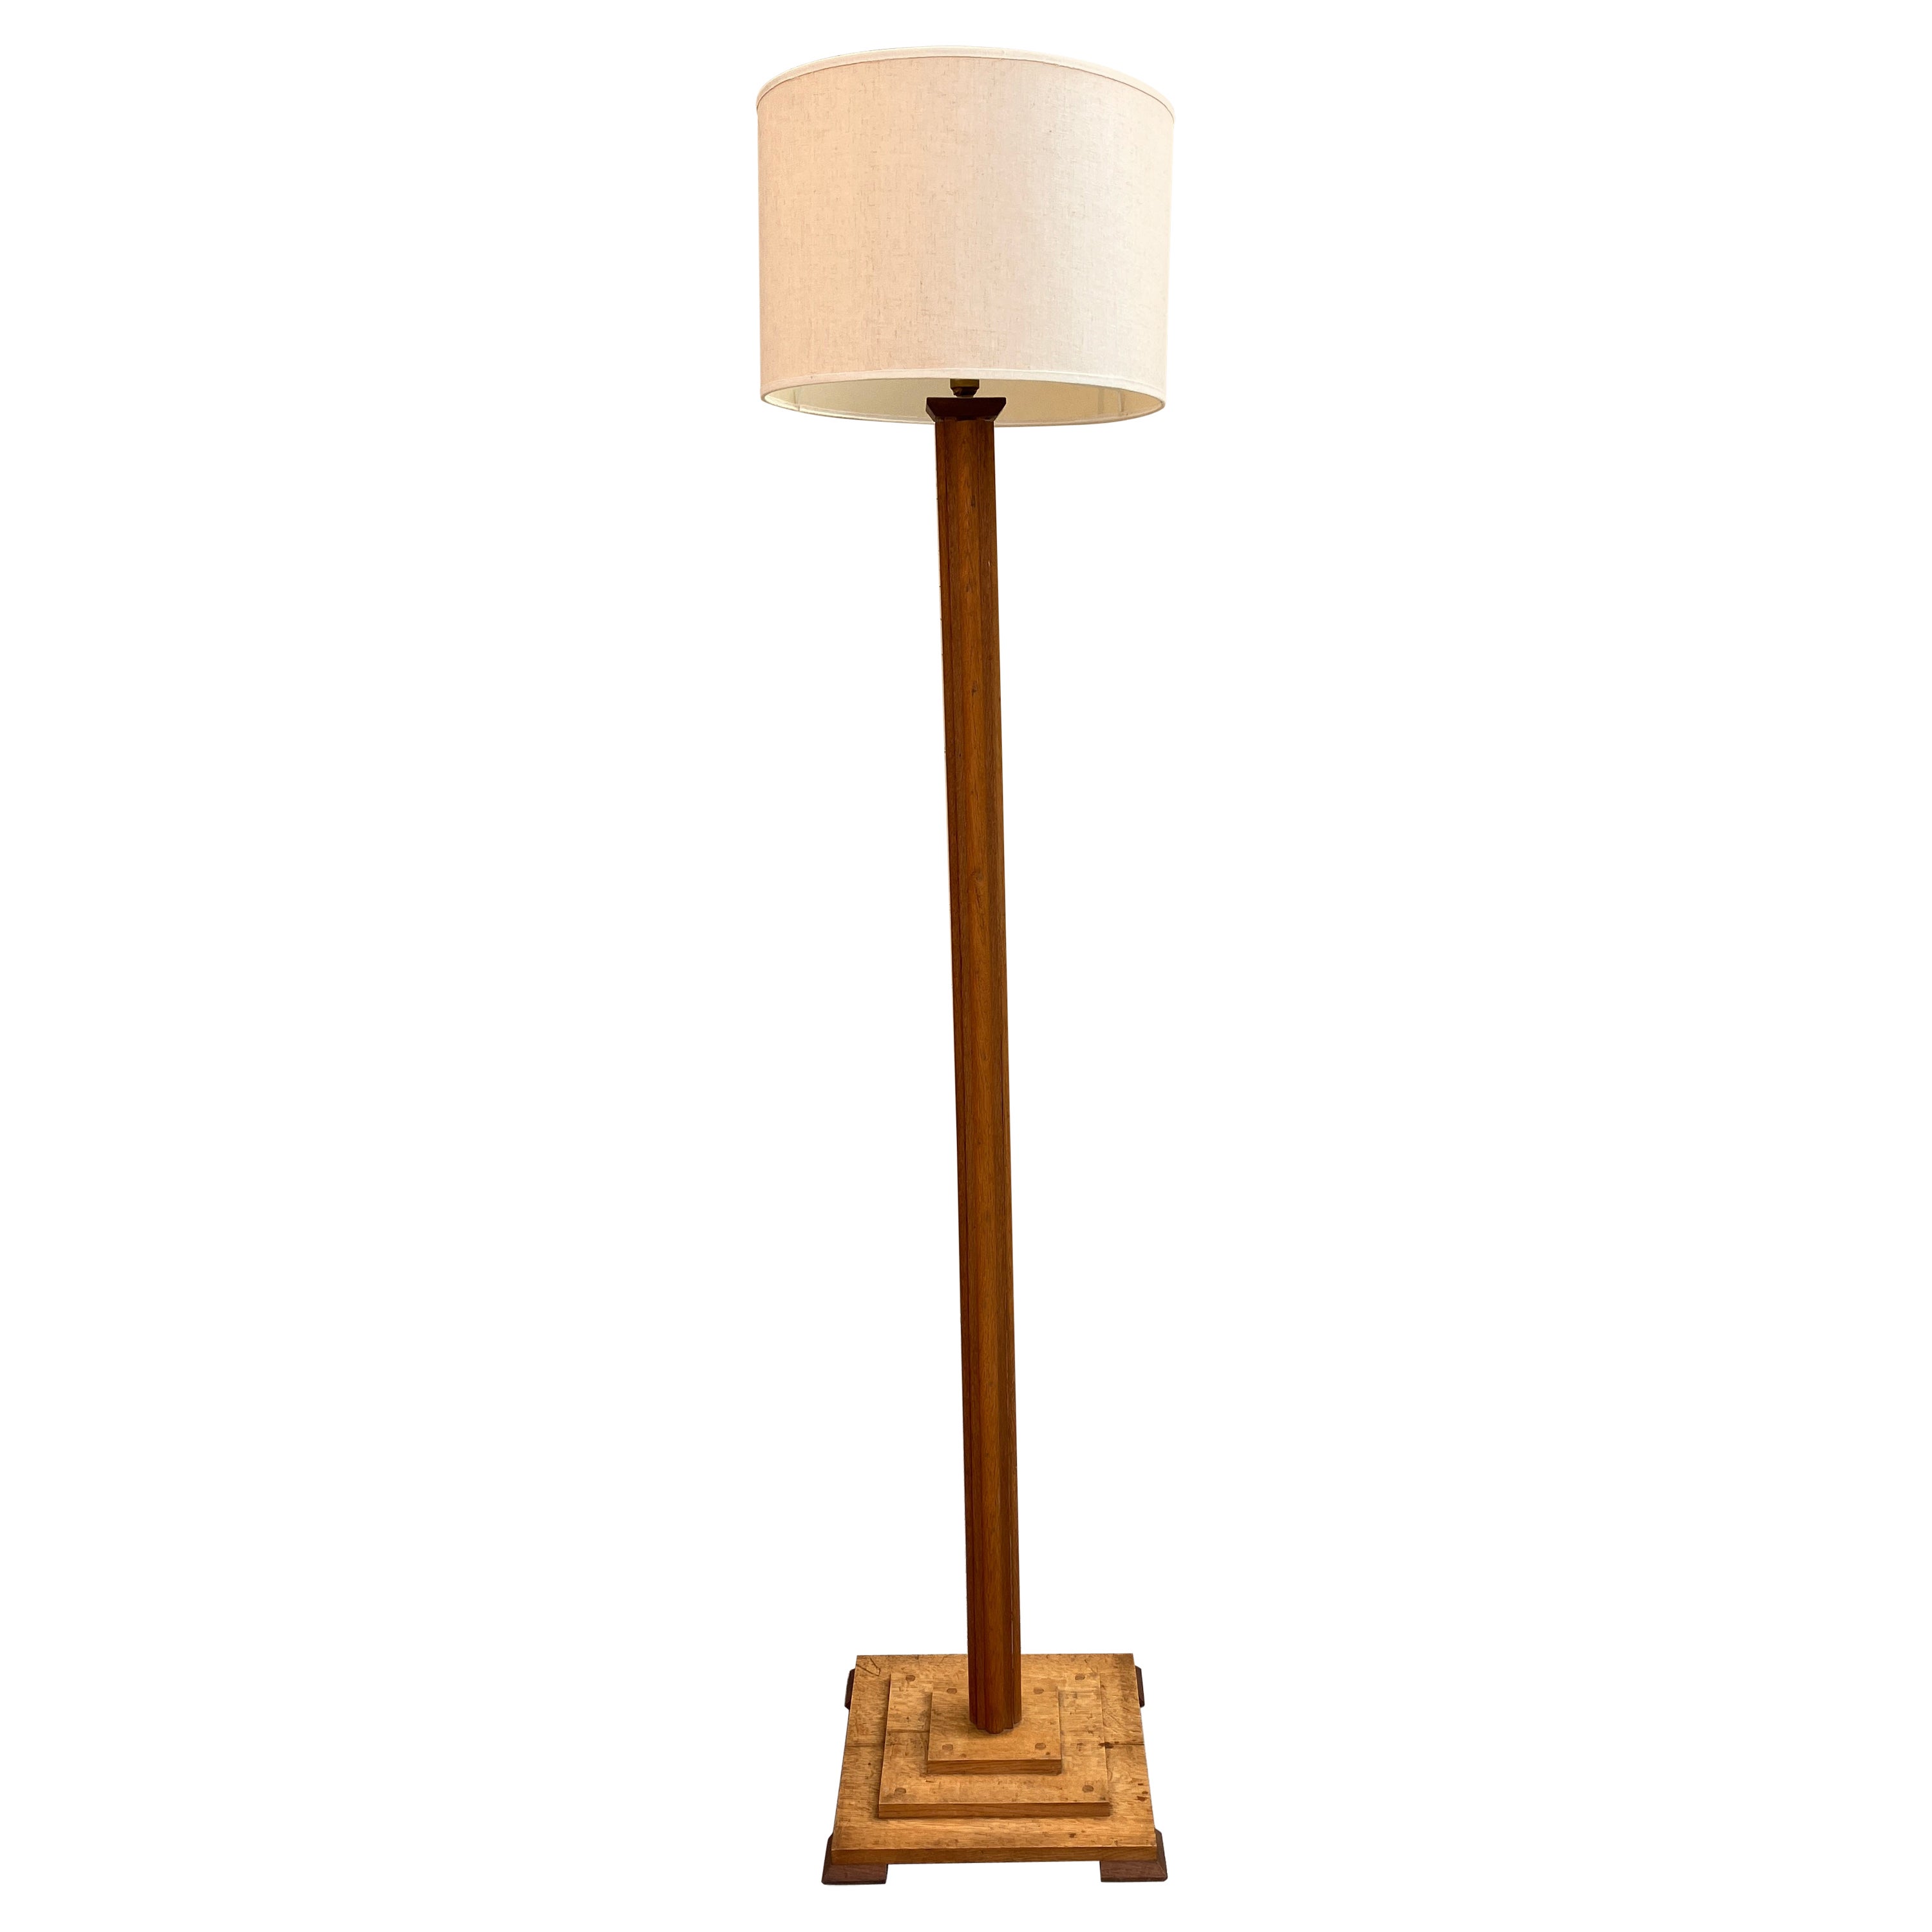 Art Deco pale oak floor lamp  / tall 20's antique standard lamp